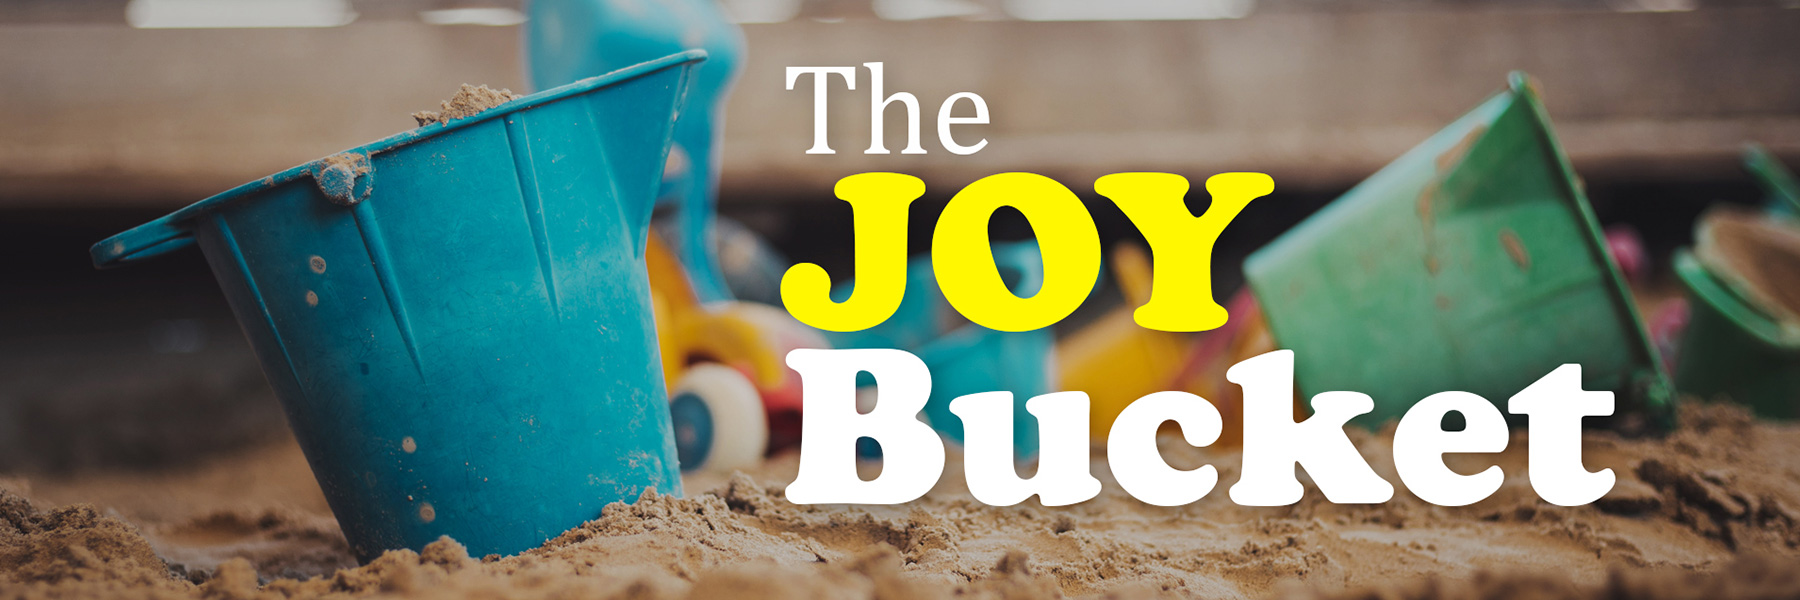 The Joy Bucket